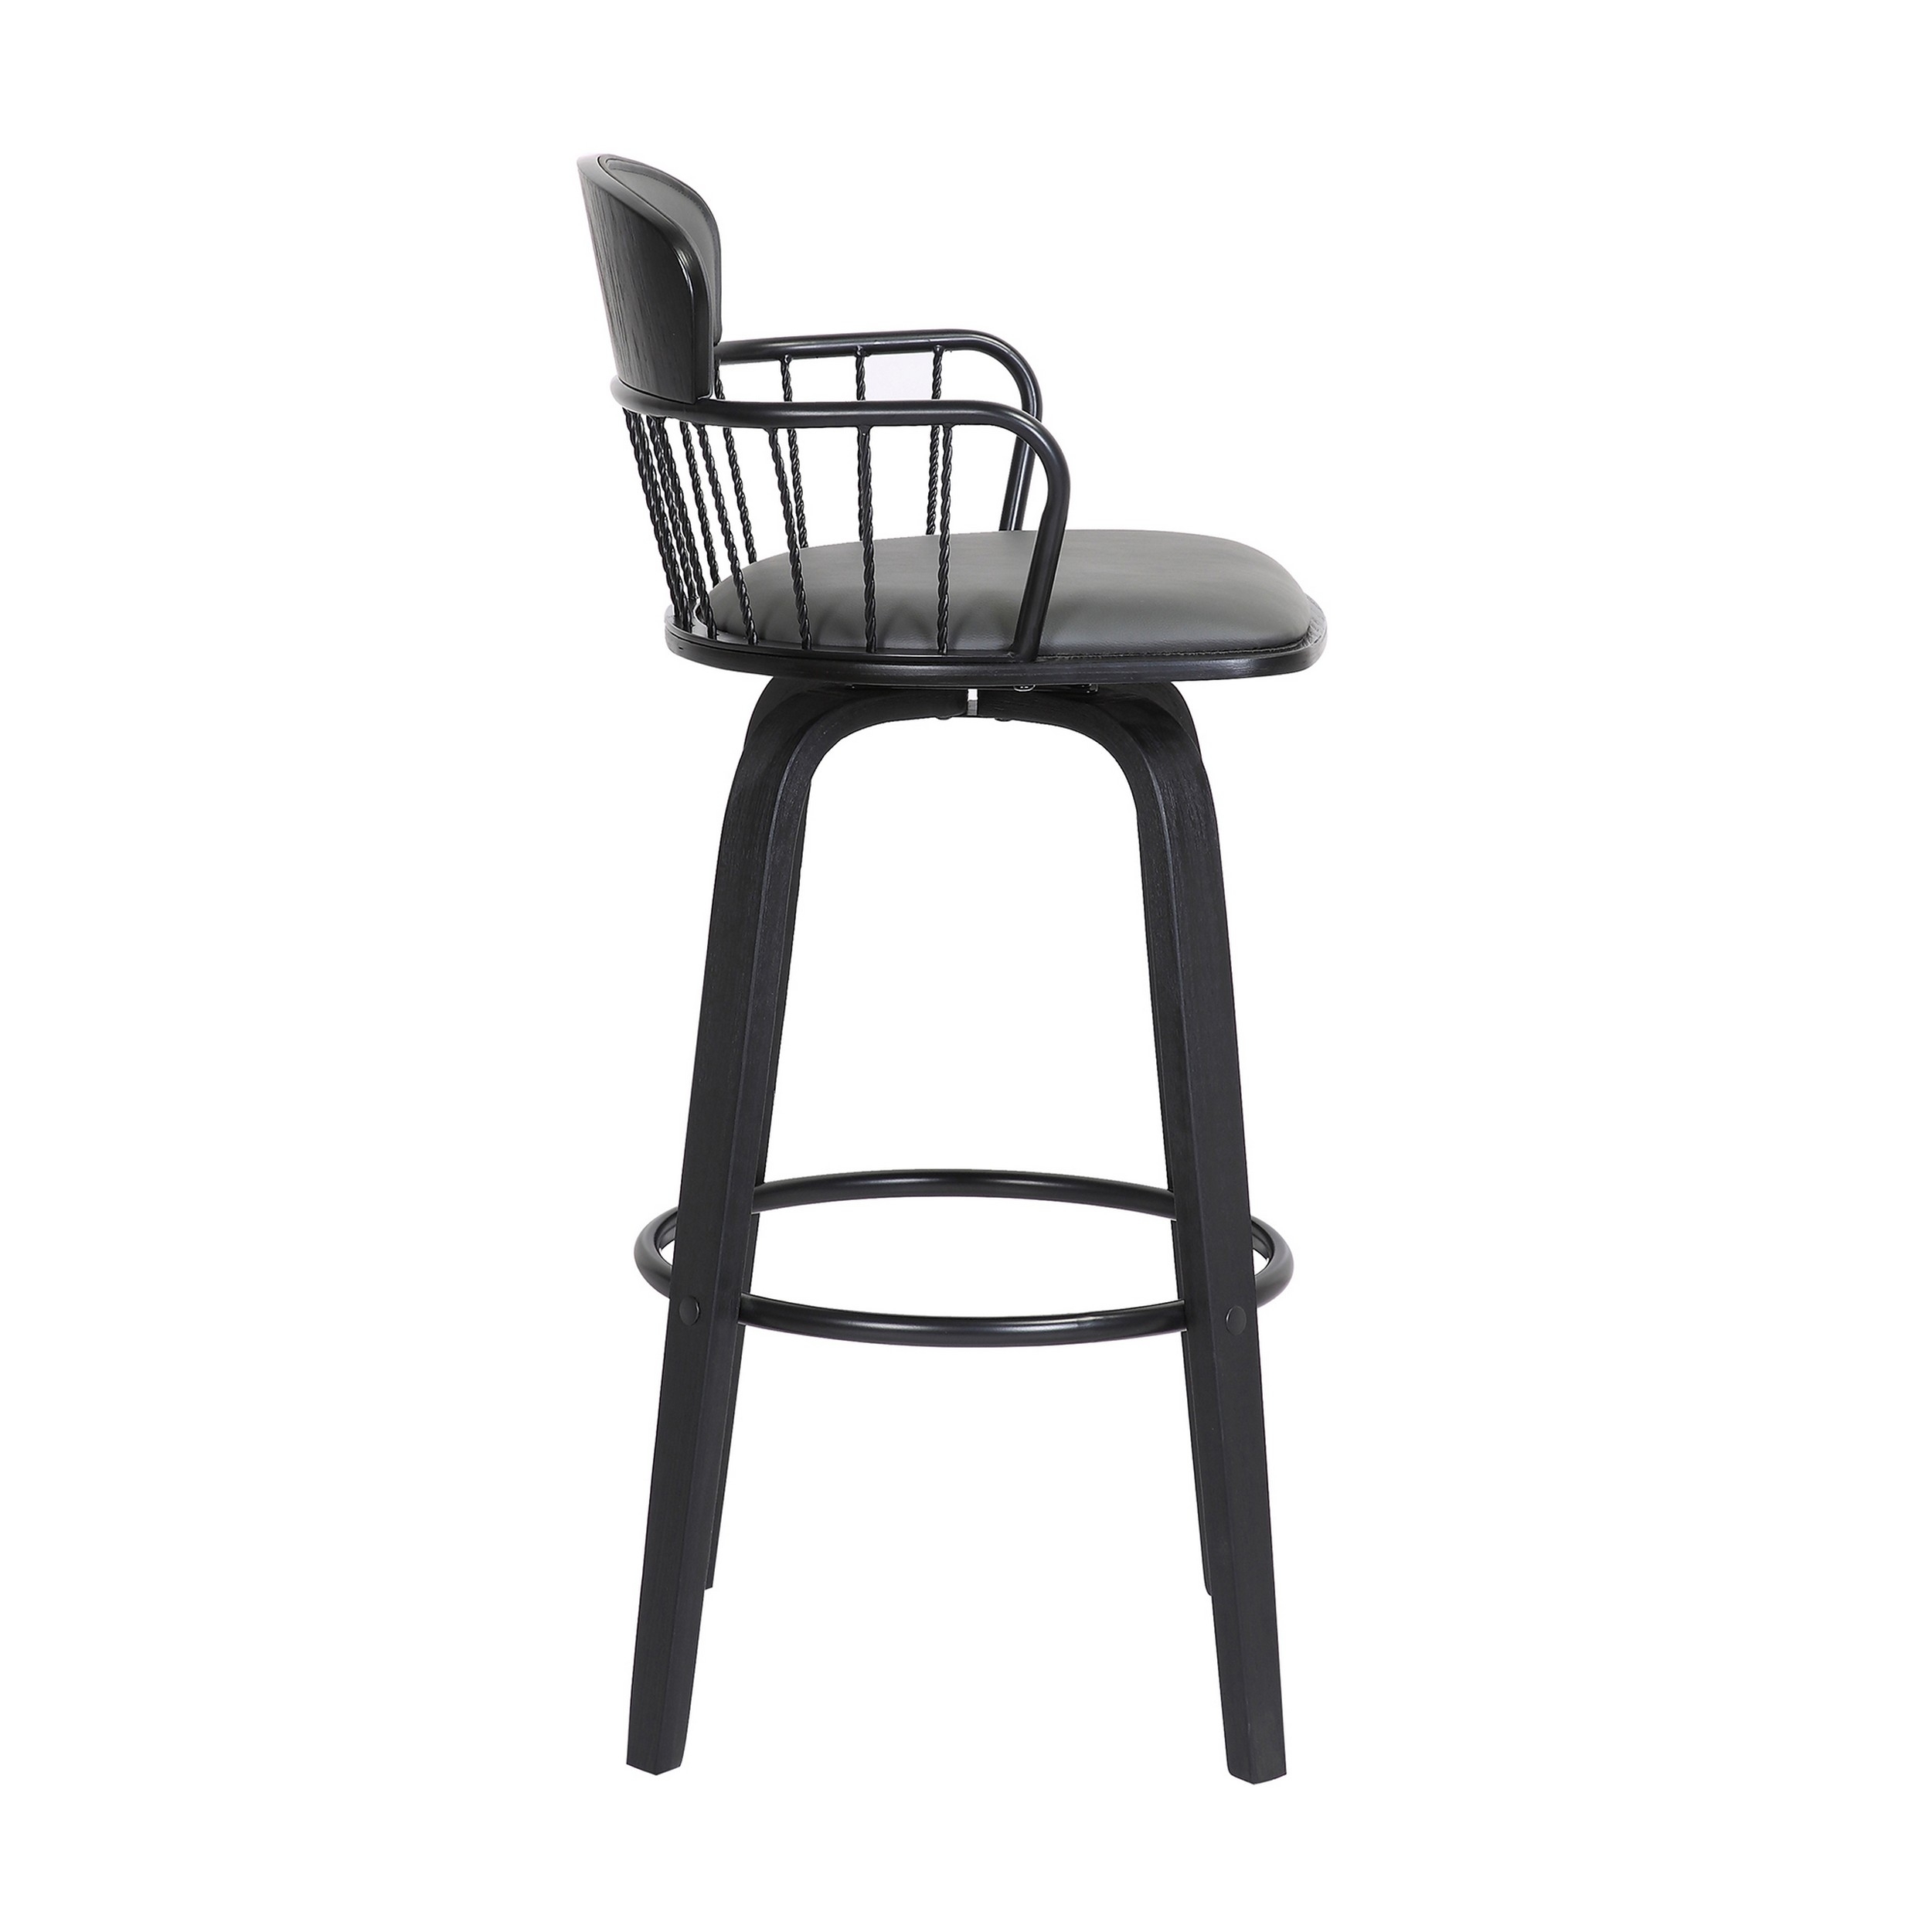 Wiz 30 Inch Barstool Chair, Slatted Back, Gray Faux Leather, Black Wood - Saltoro Sherpi